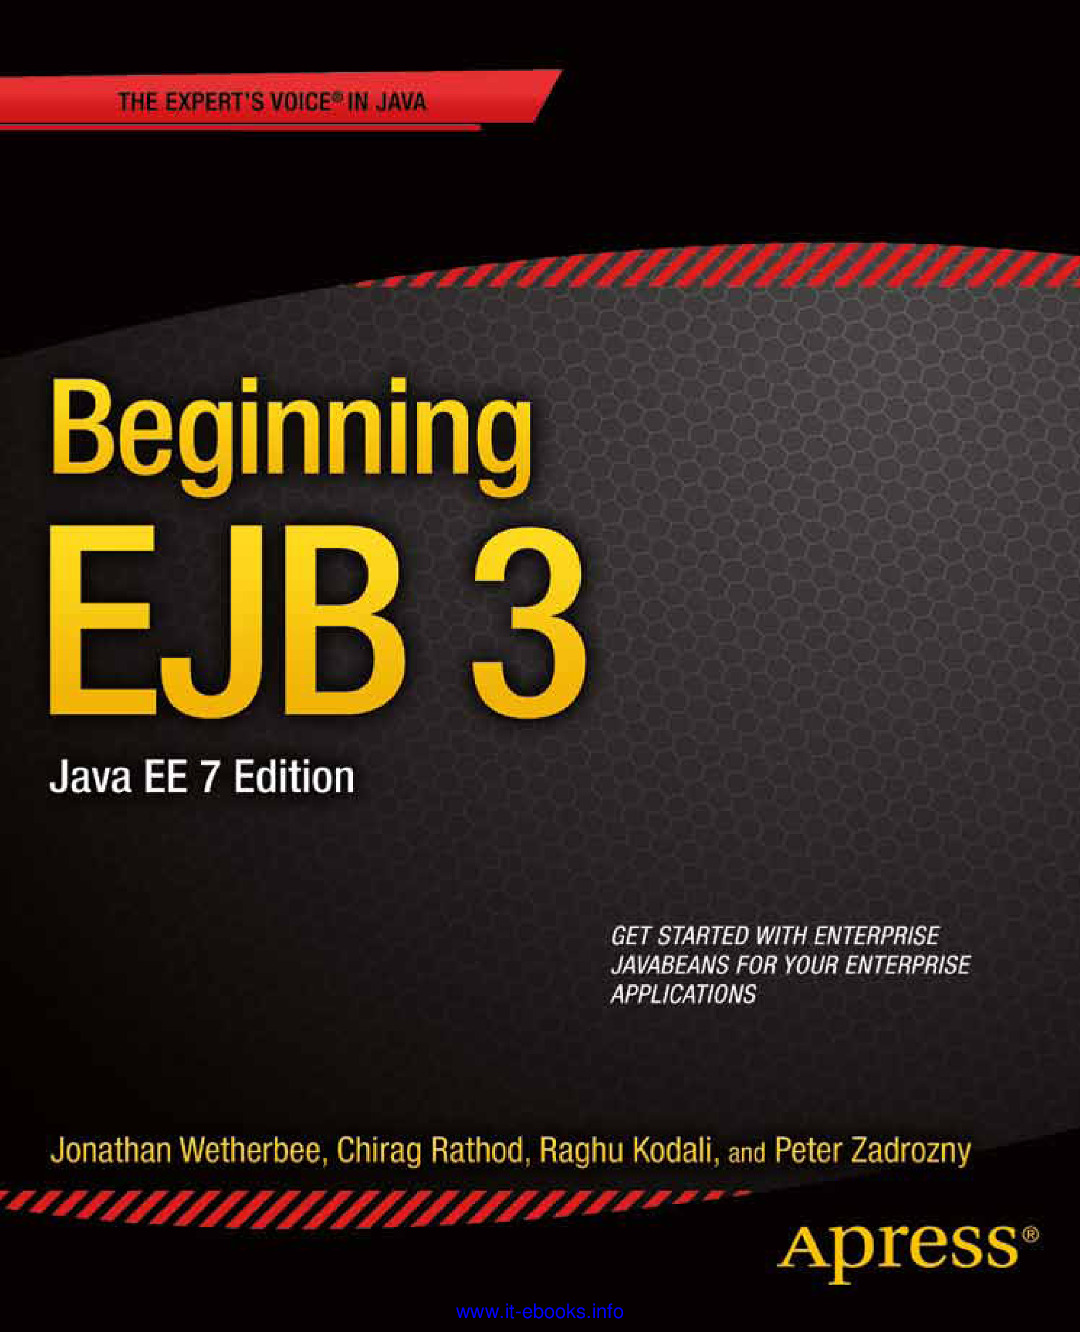 [JAVA][Beginning EJB 3, 2nd Edition]